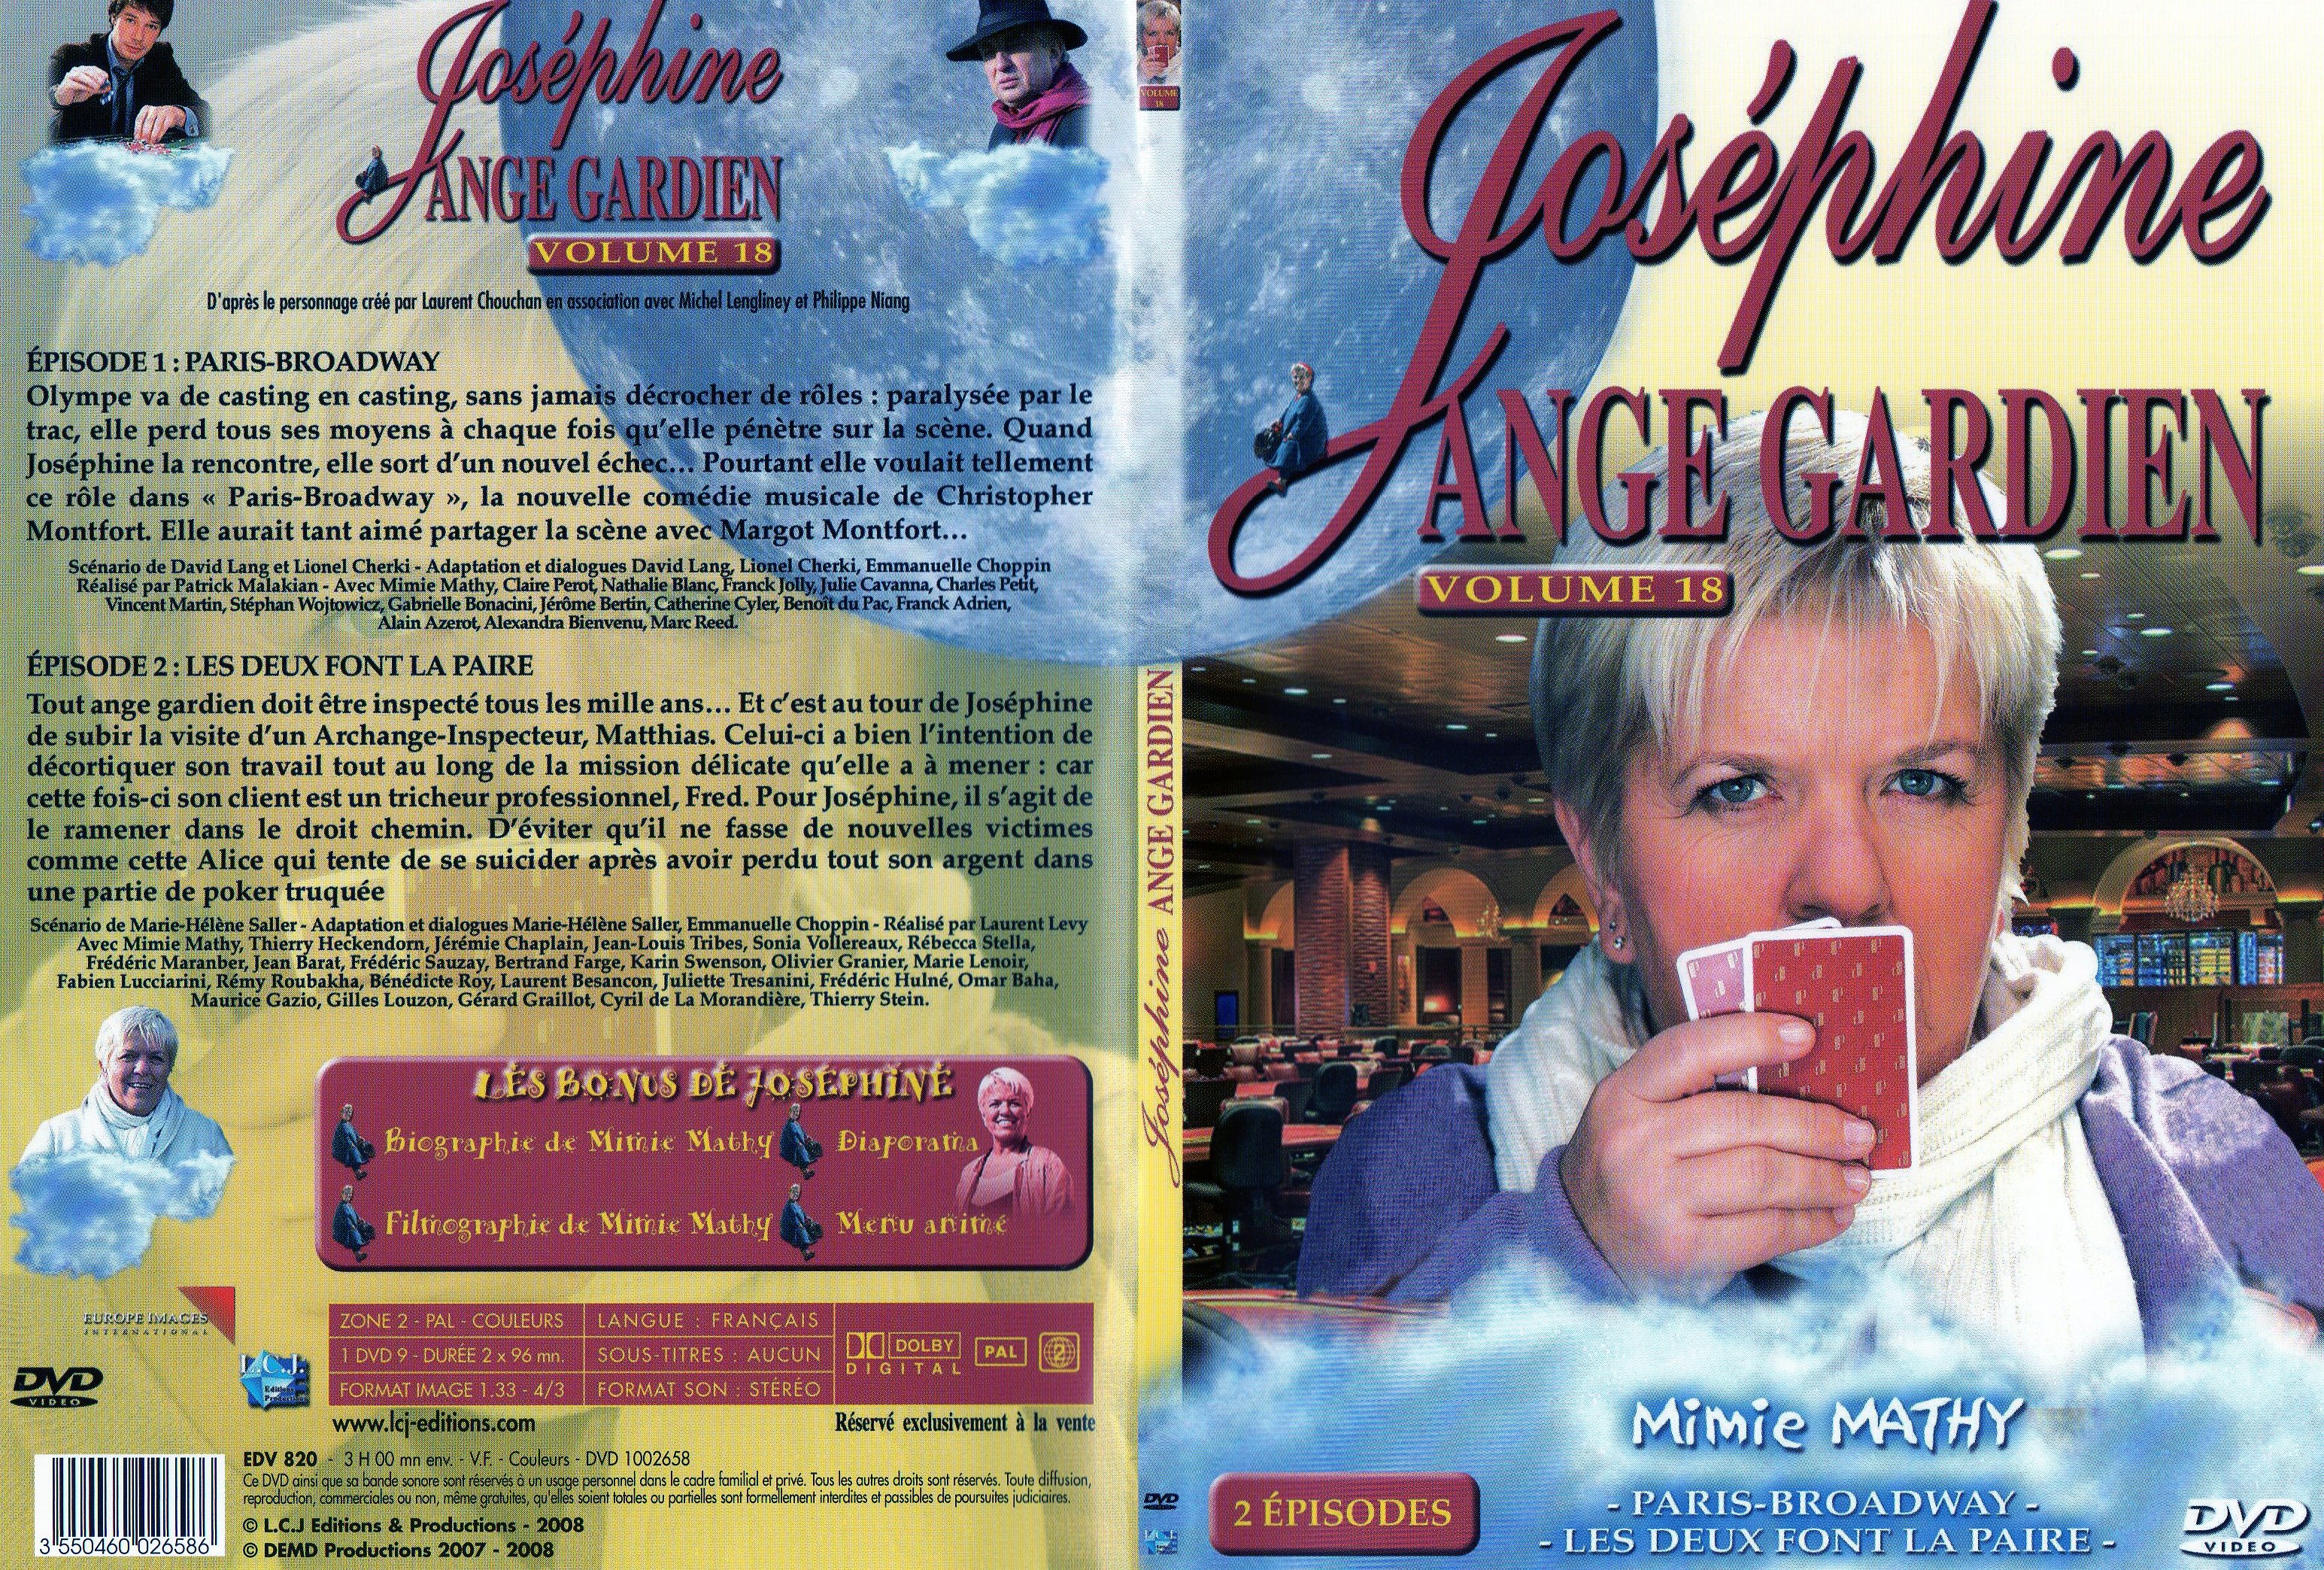 Jaquette DVD Josphine Ange Gardien saison 4 DVD 18